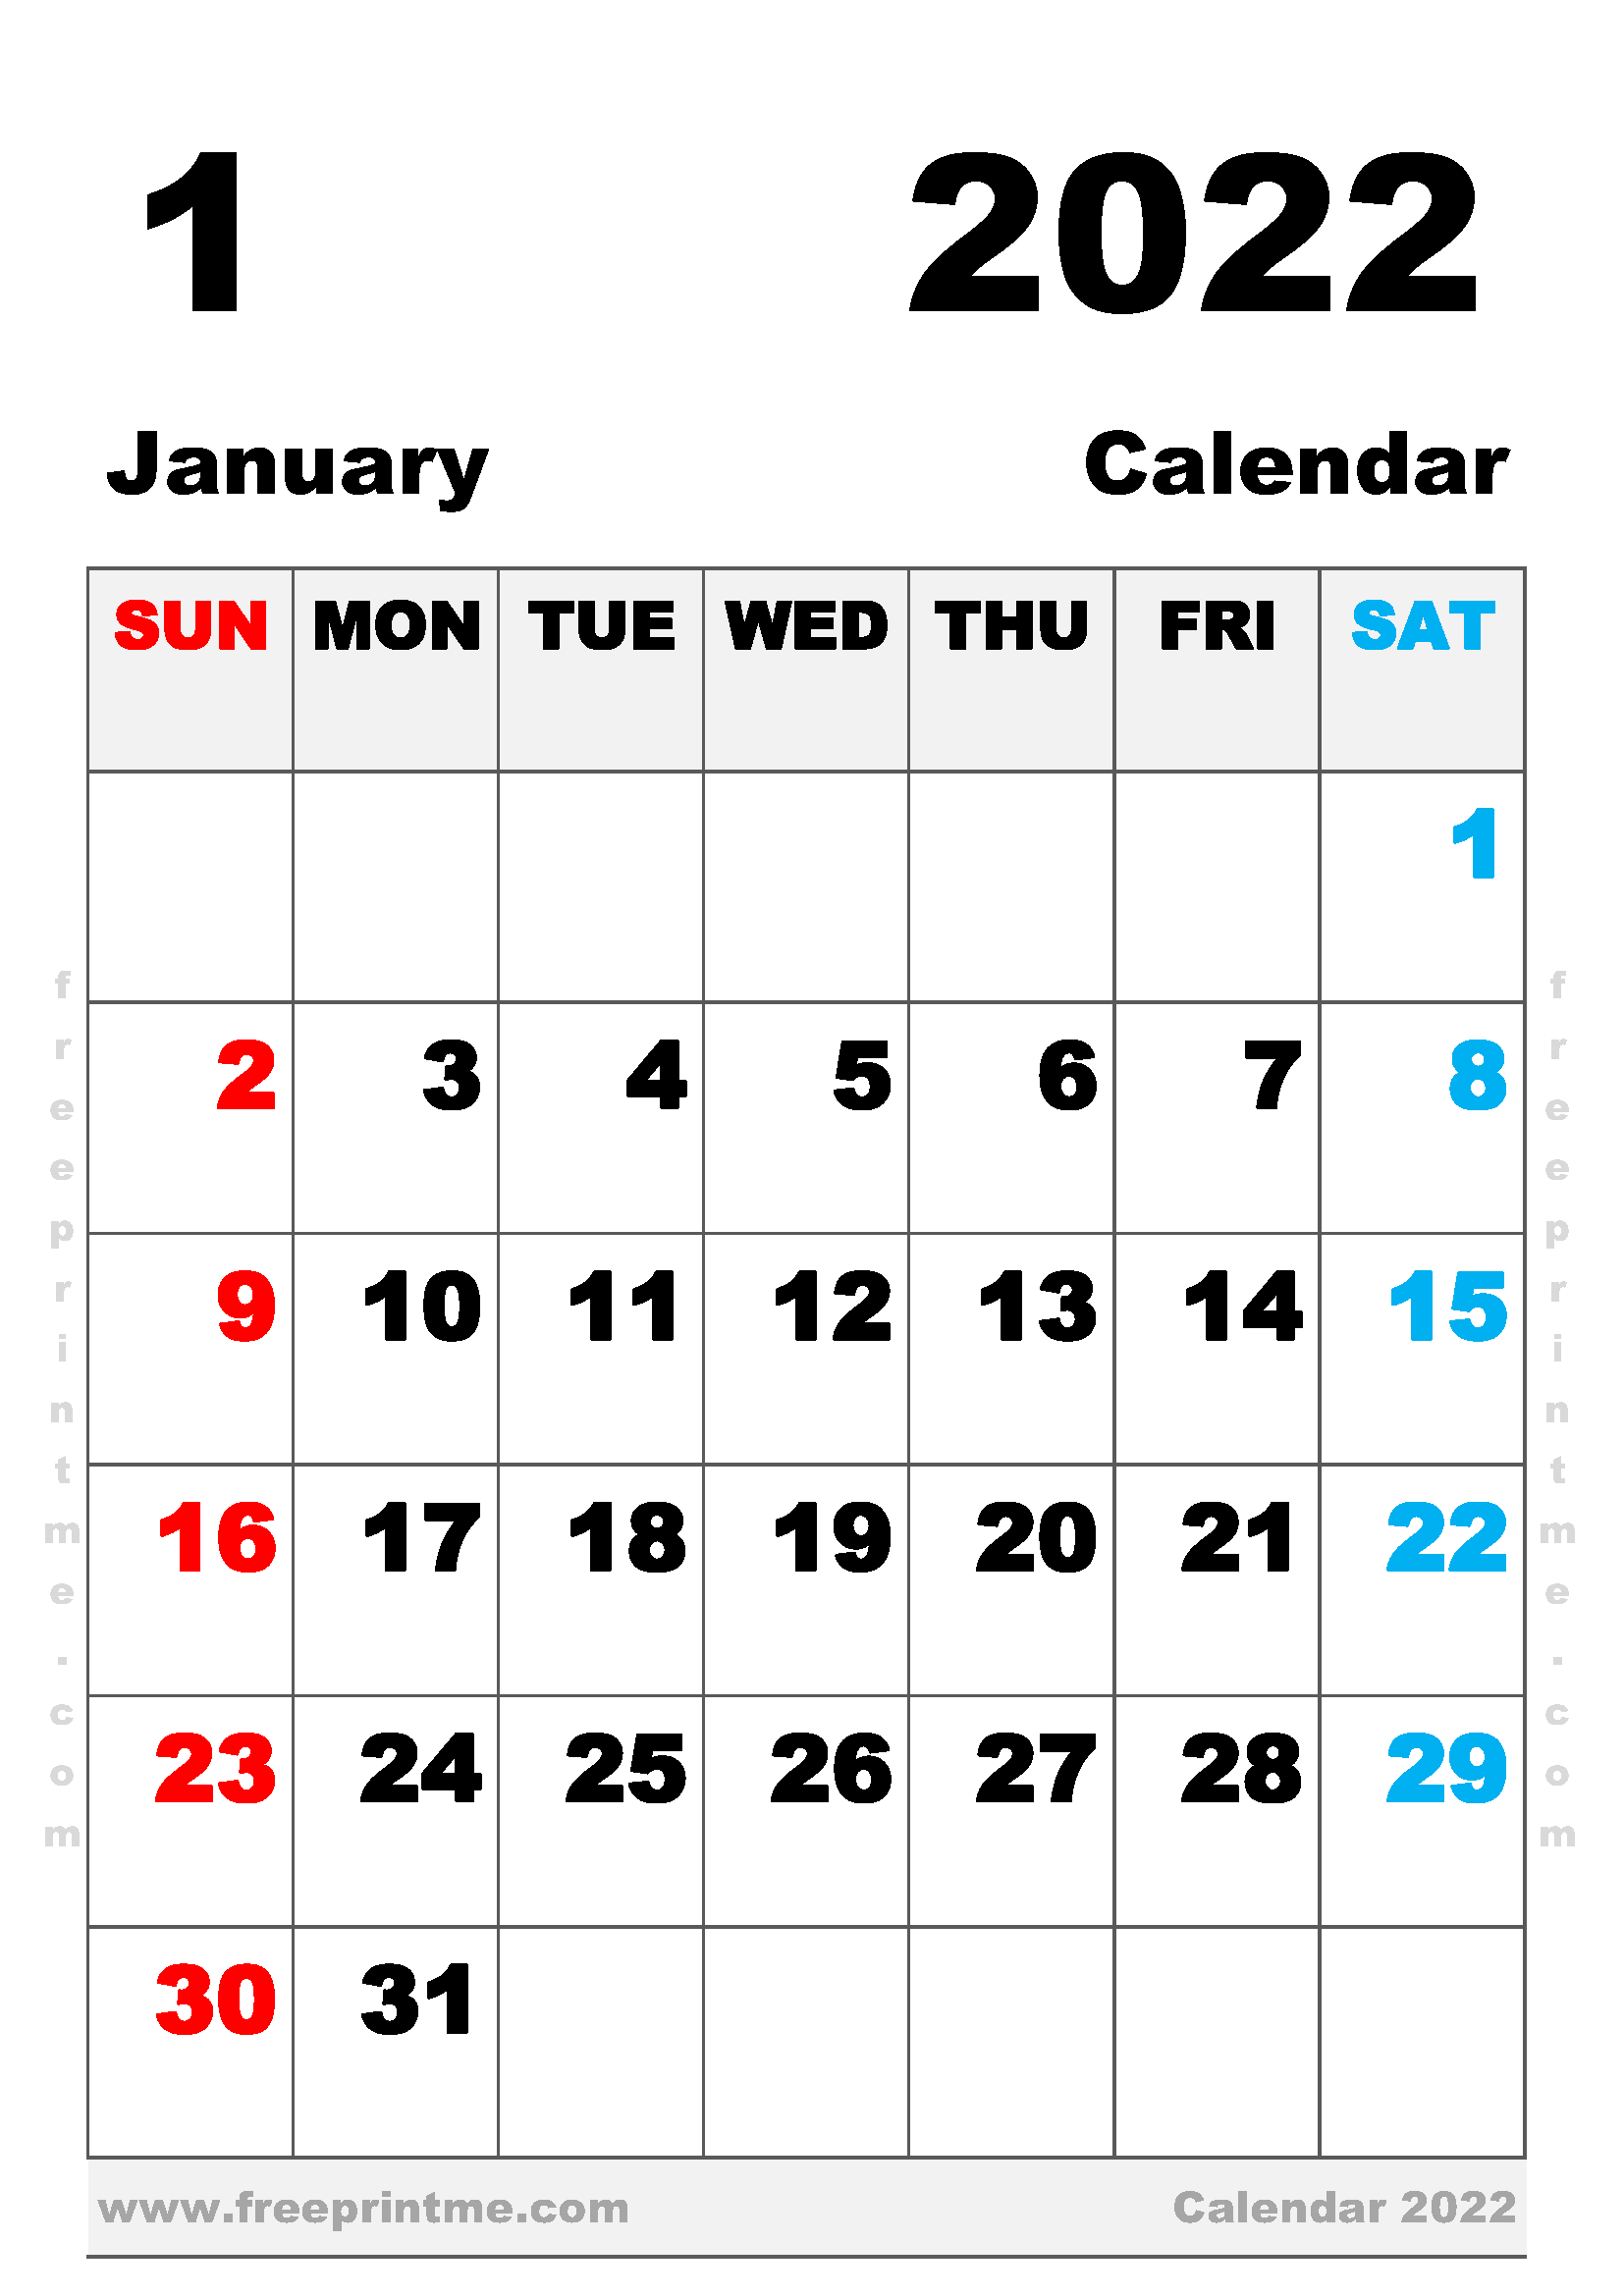 Free January 2022 Calendar Free Printable January 2022 Calendar A4